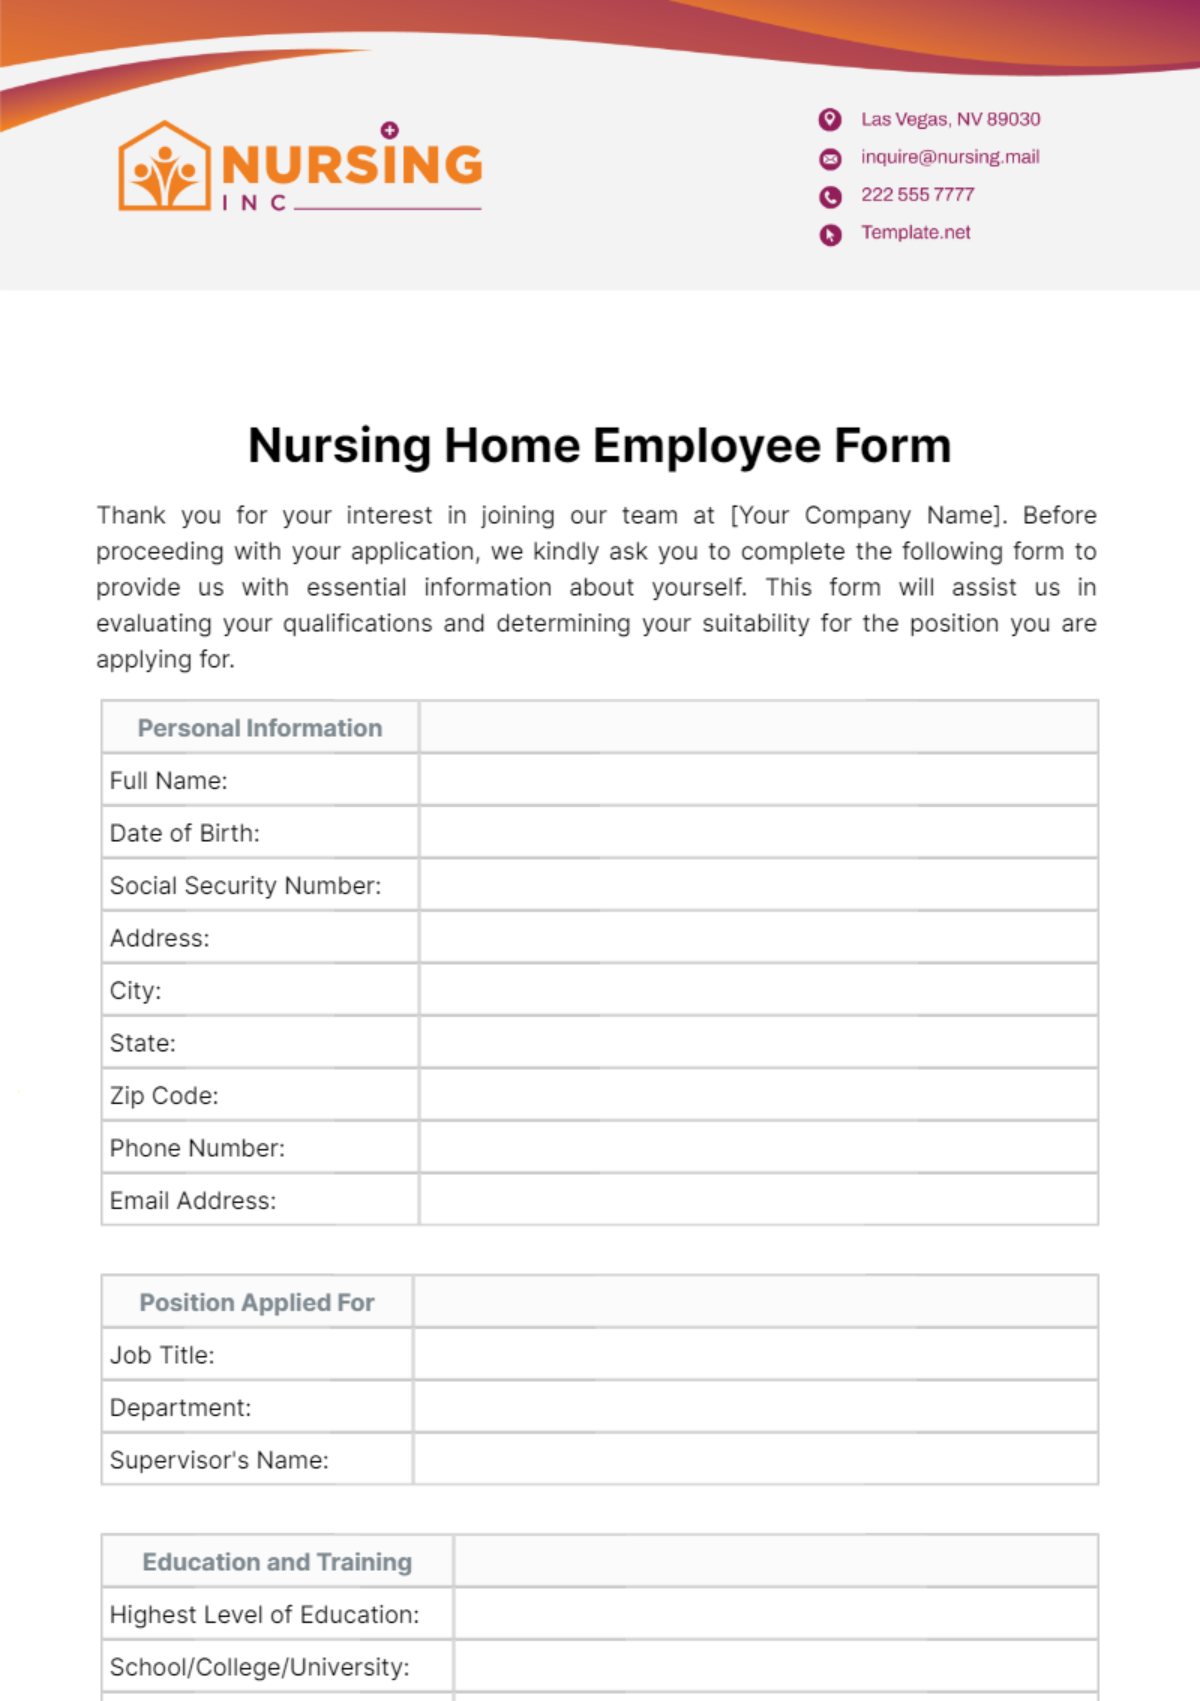 Nursing Home Employee Form Template